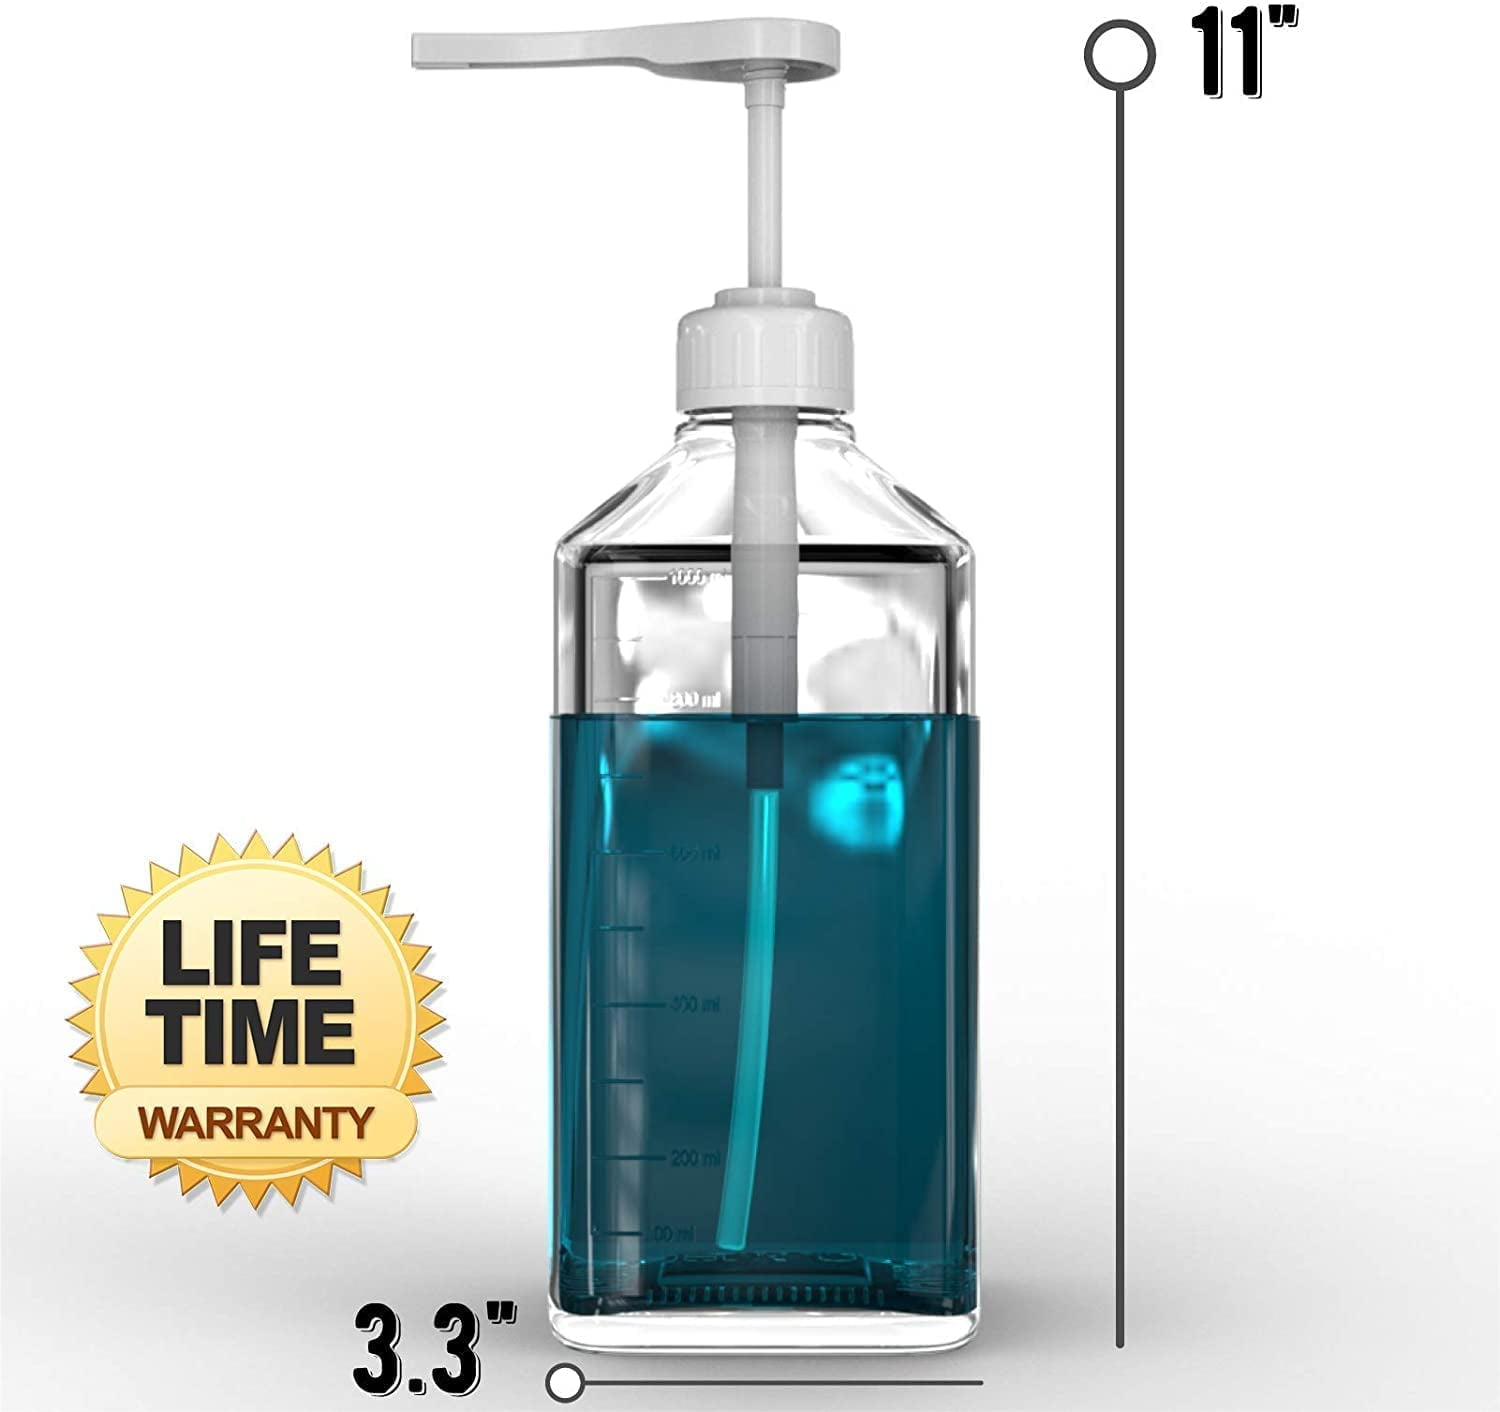 37-Ounce Mouthwash Dispenser Glass Pump BottlePerfect Bathroom Essential for 